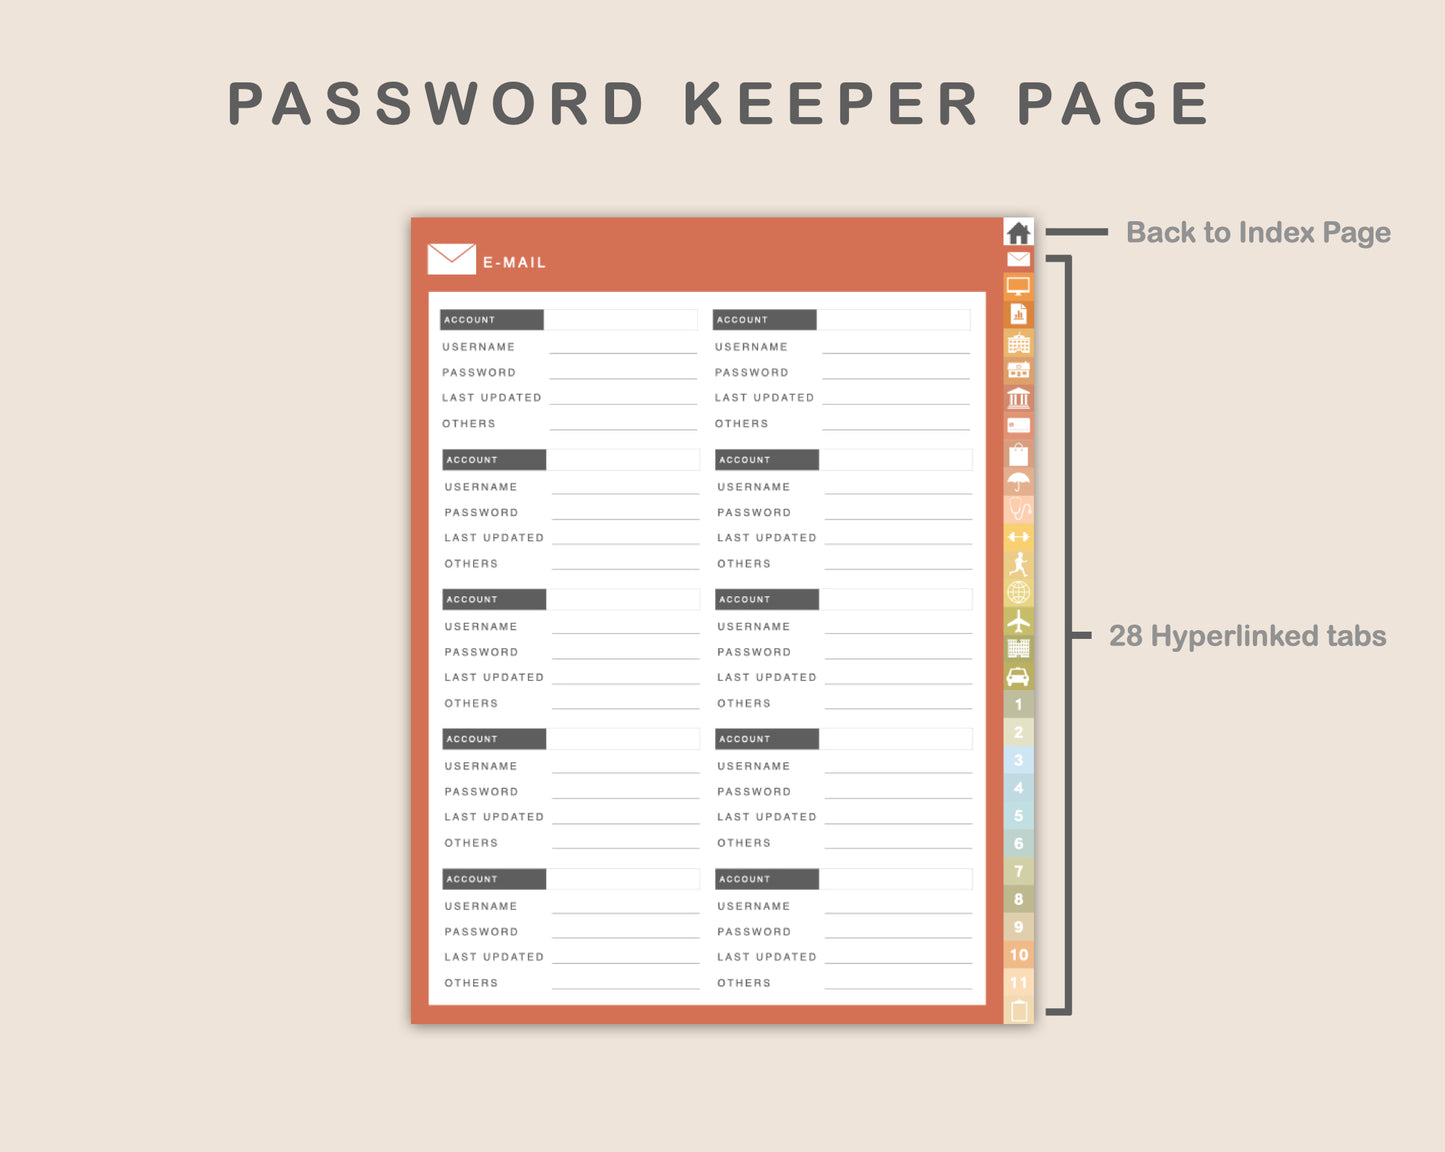 Digital Password Keeper - Autumn